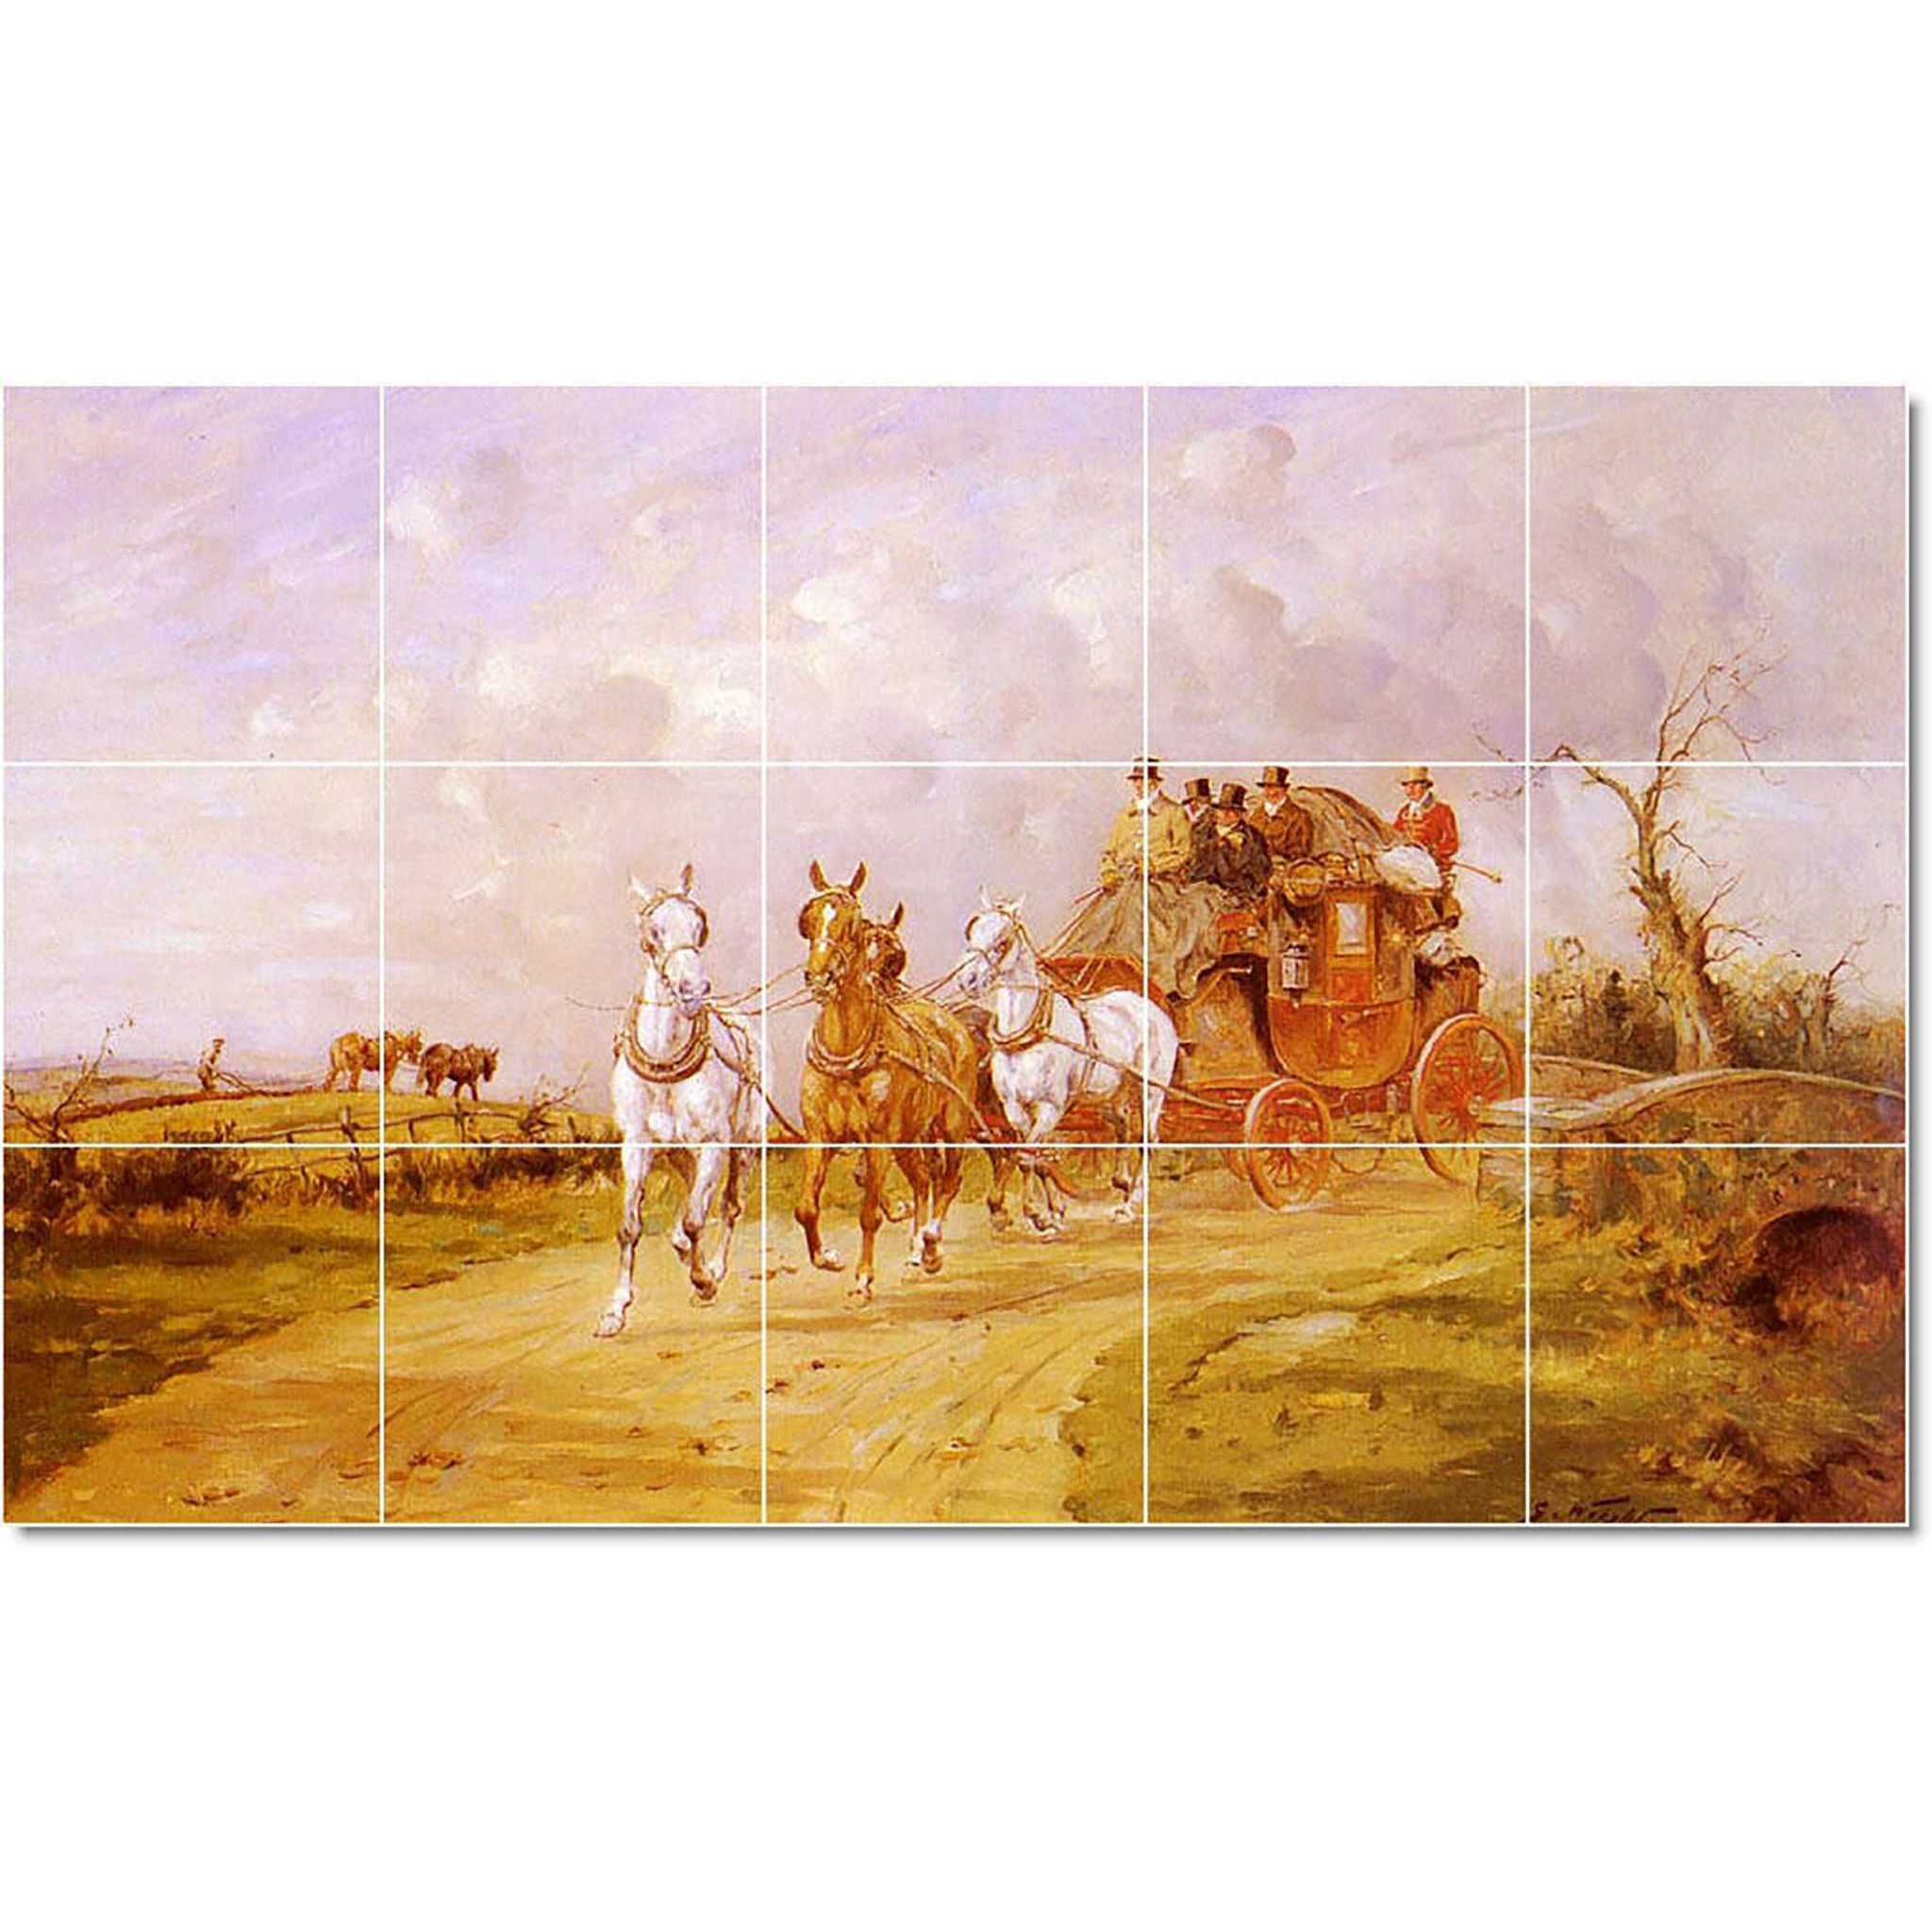 george wright horse painting ceramic tile mural p23260